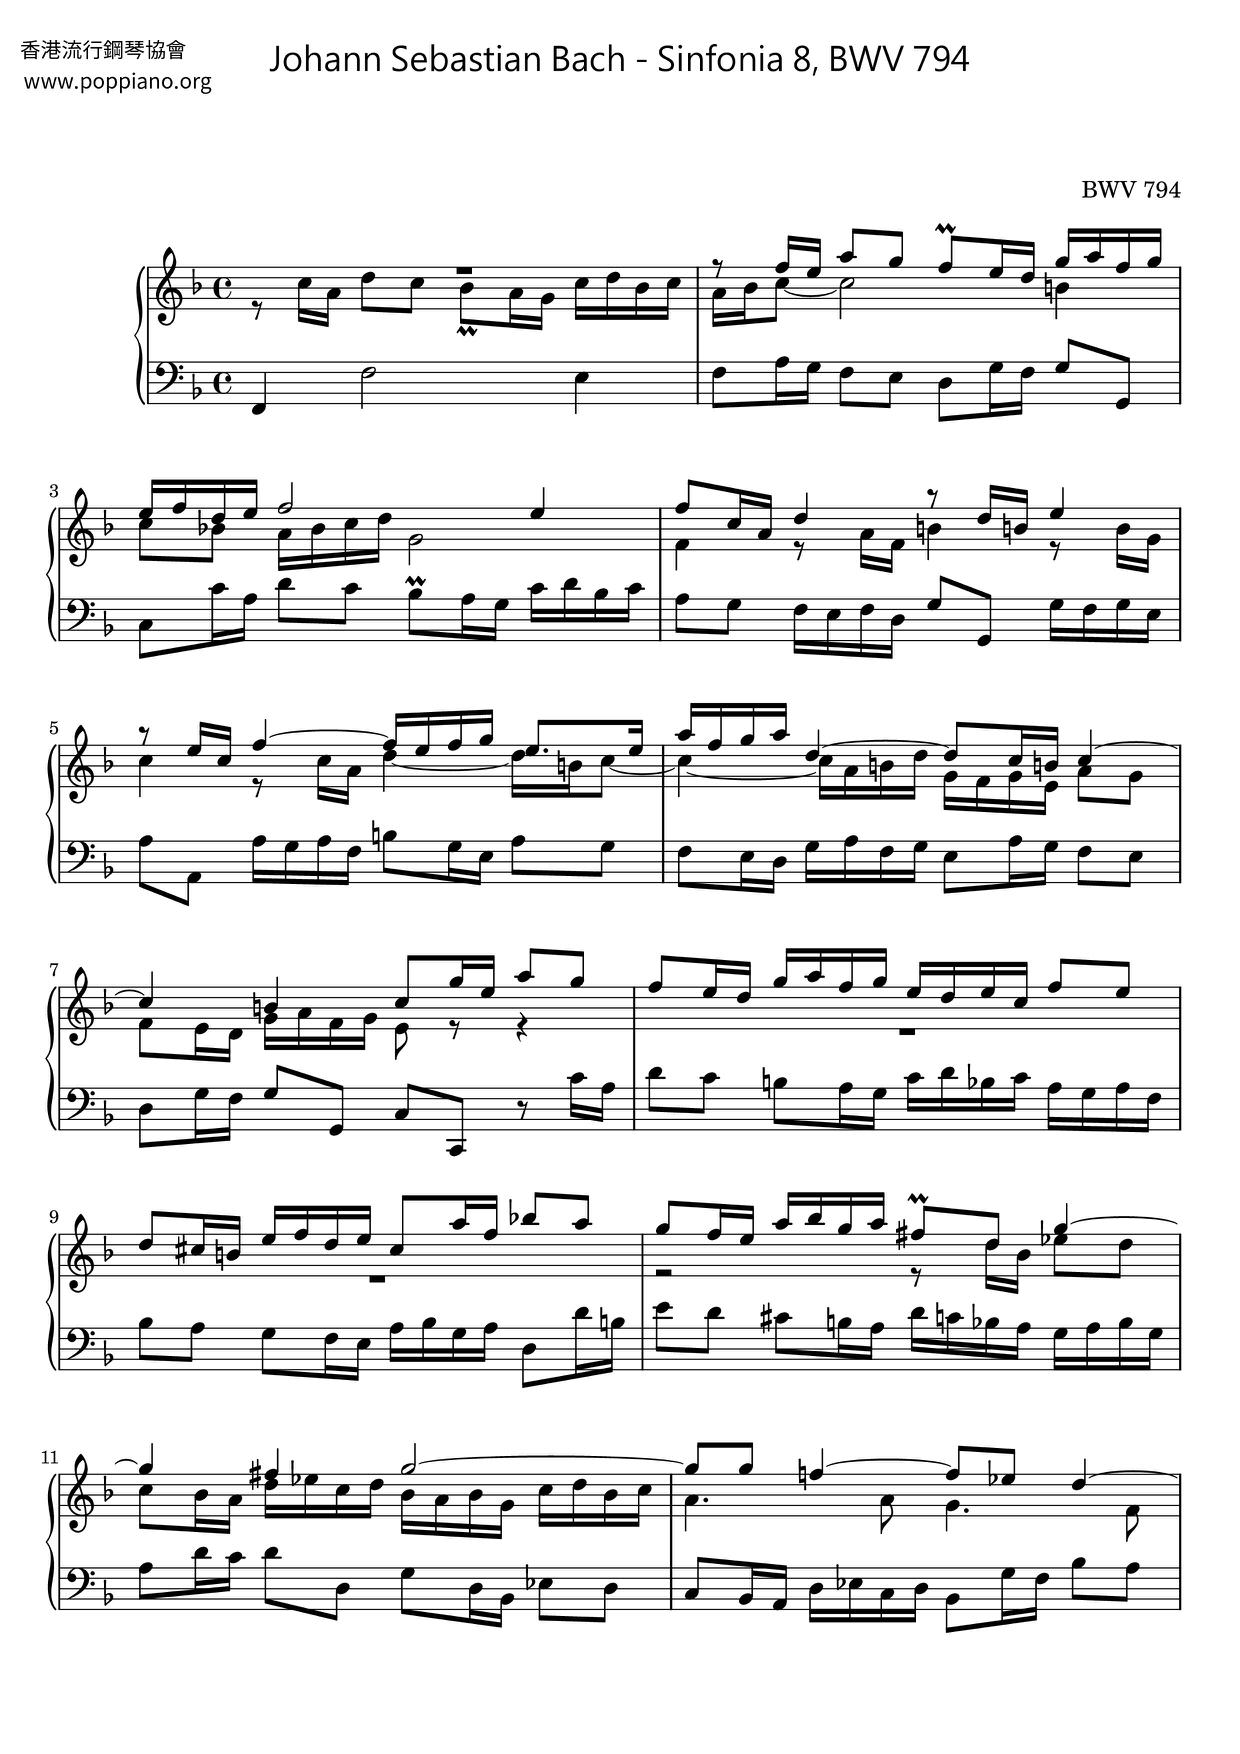 Sinfonia 8, BWV 794 Score